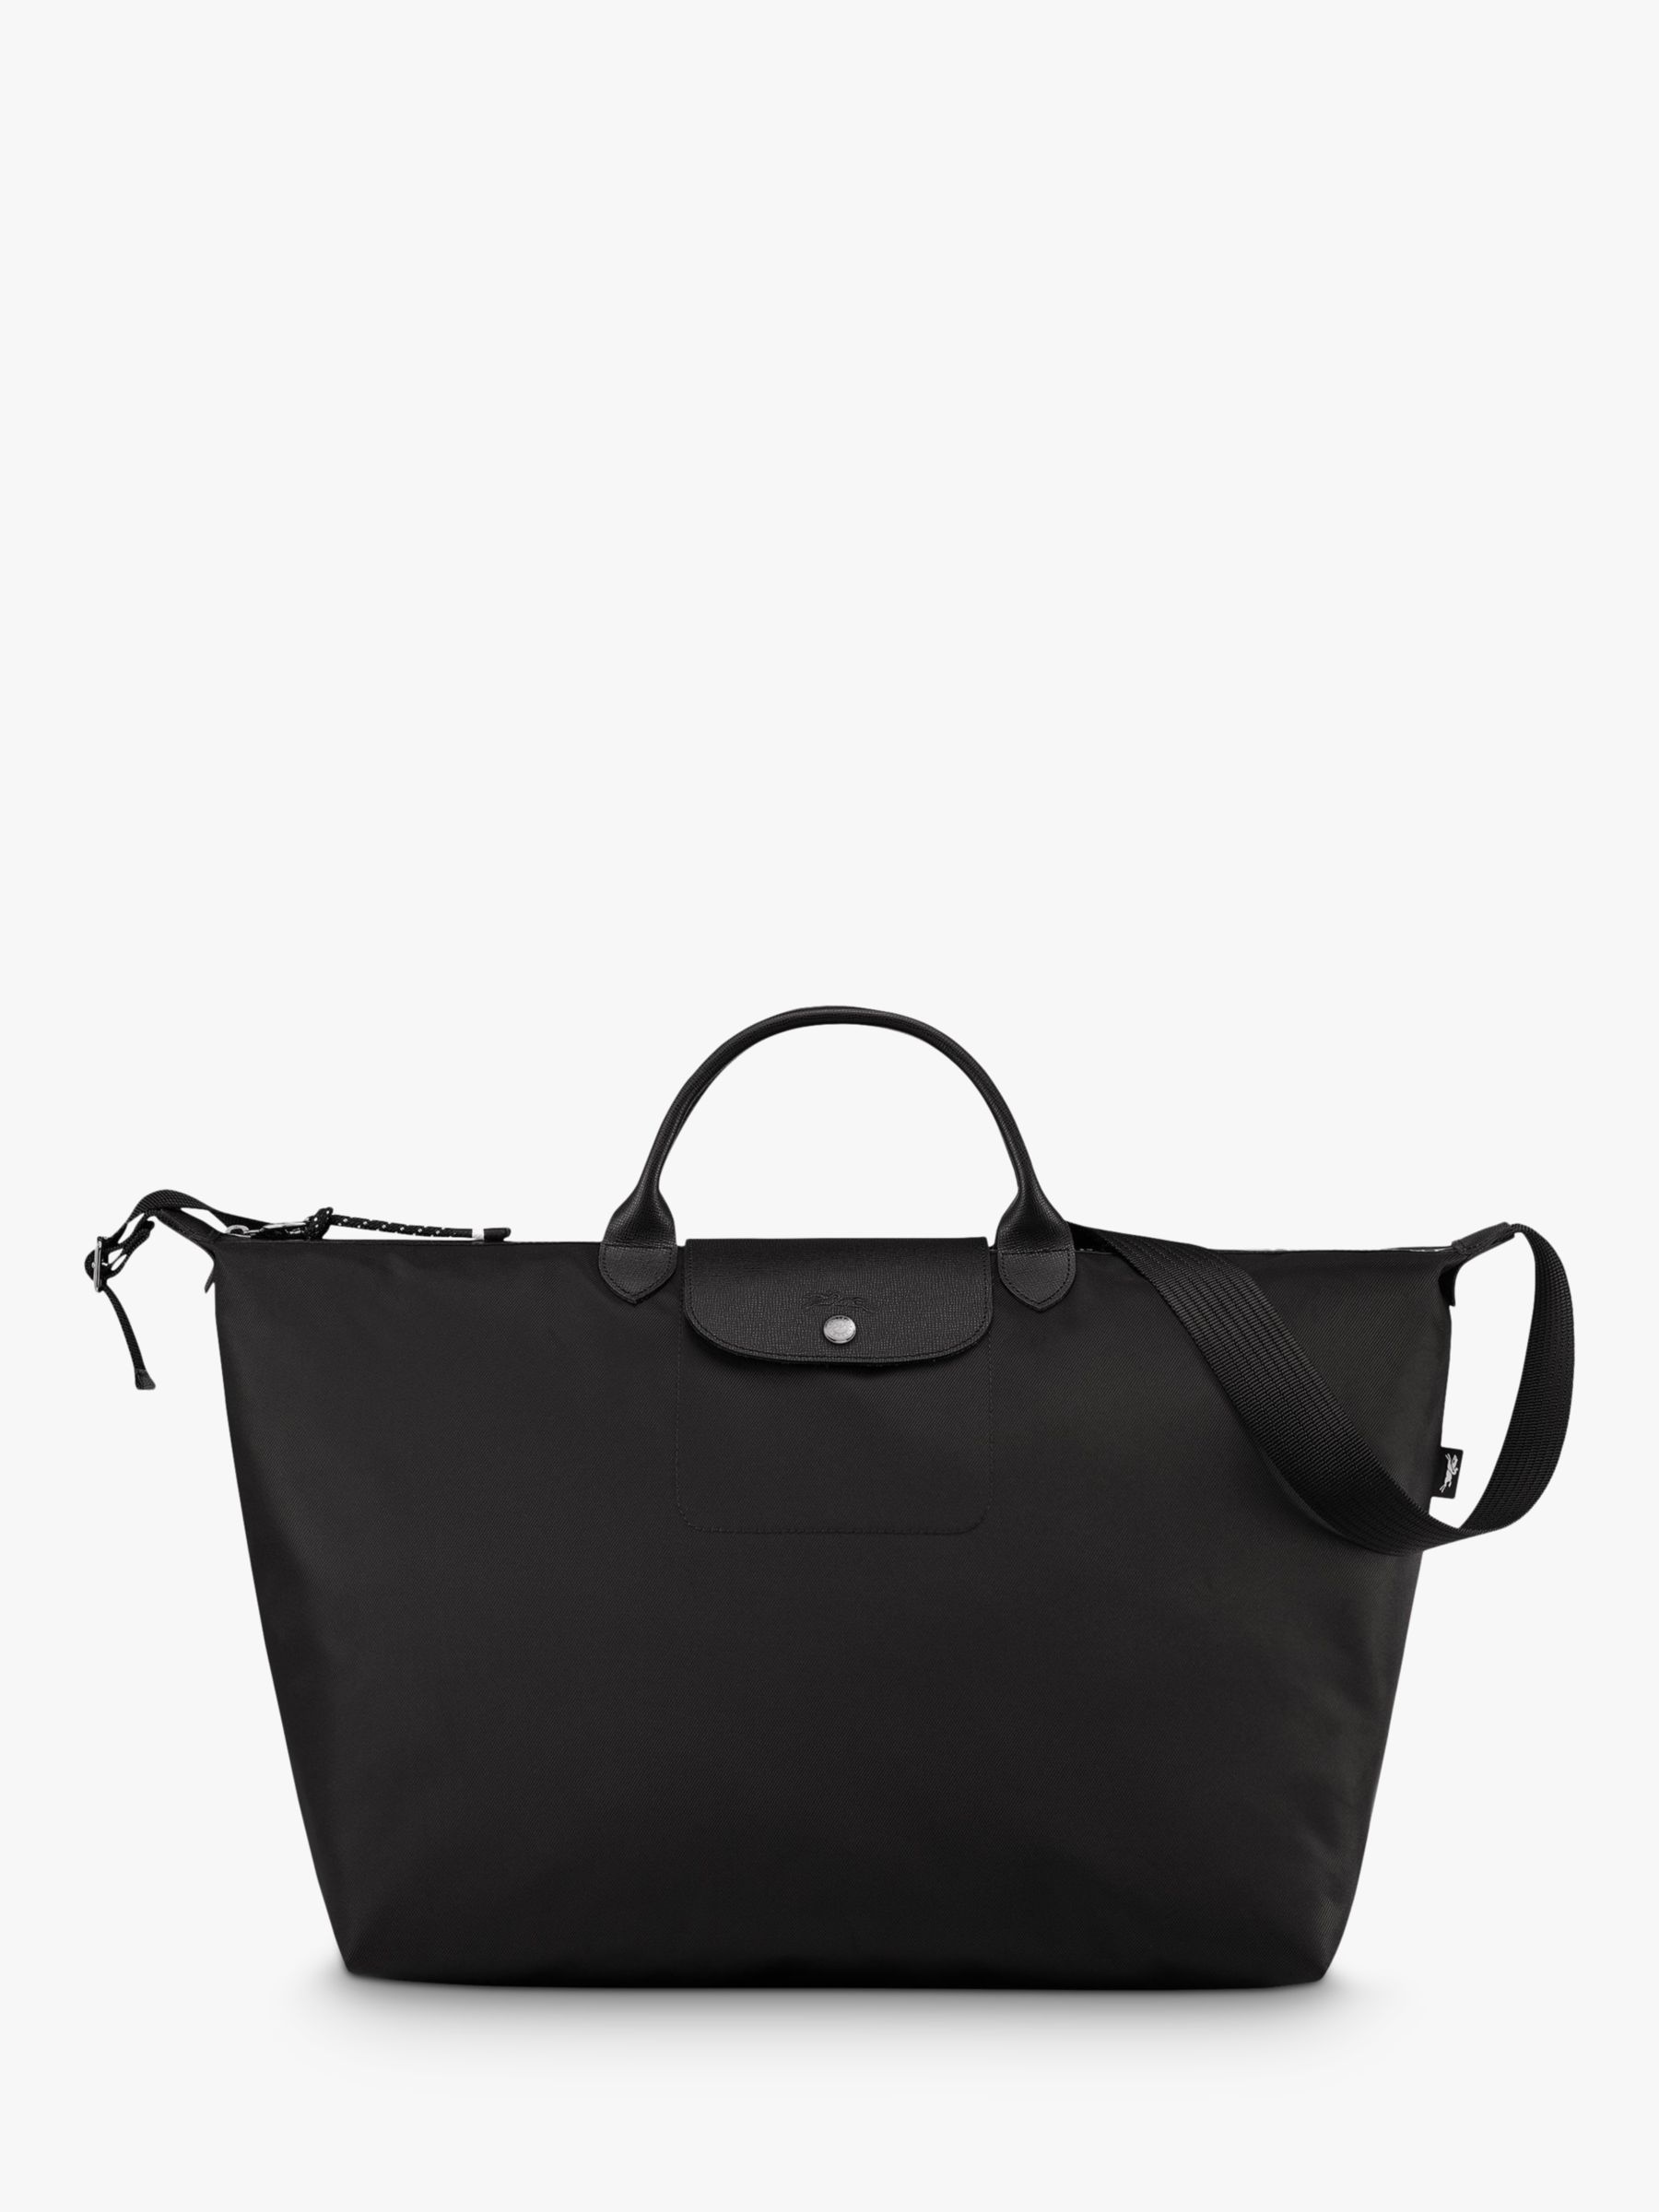 Longchamp Le Pliage Energy Large Travel Bag, Black at John Lewis & Partners